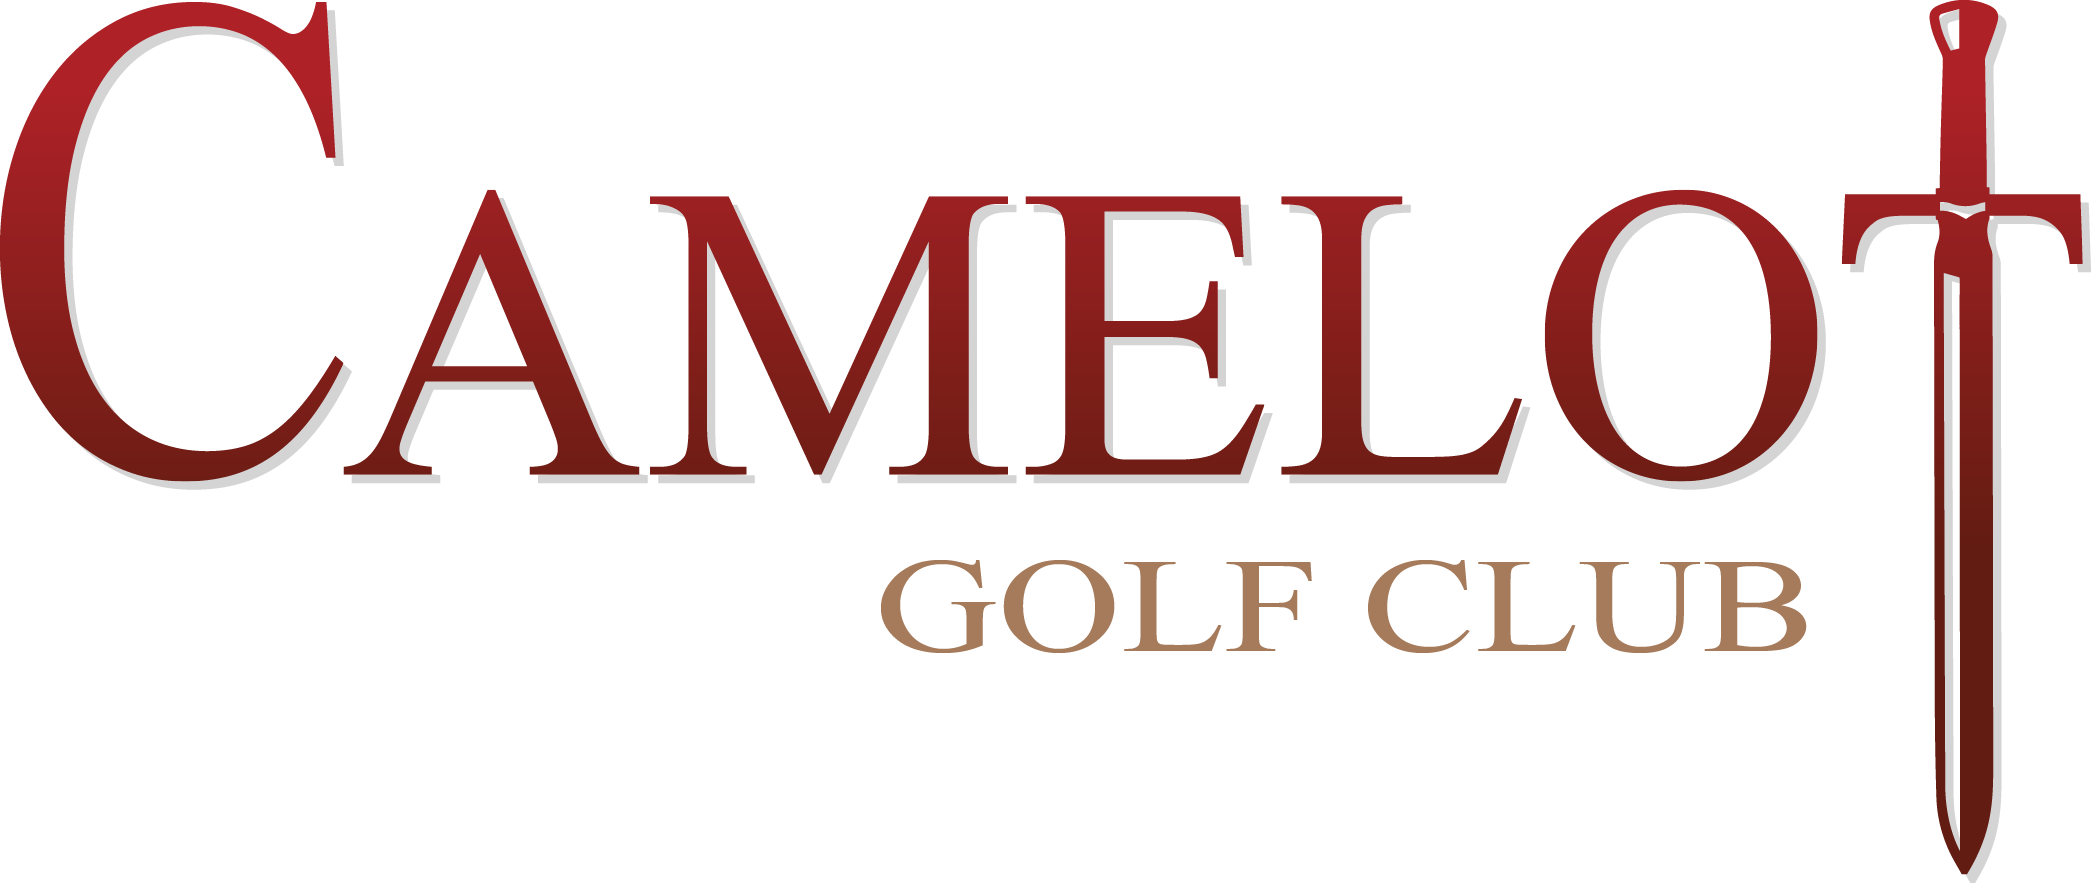 Camelot Golf Club – Lomira, WI